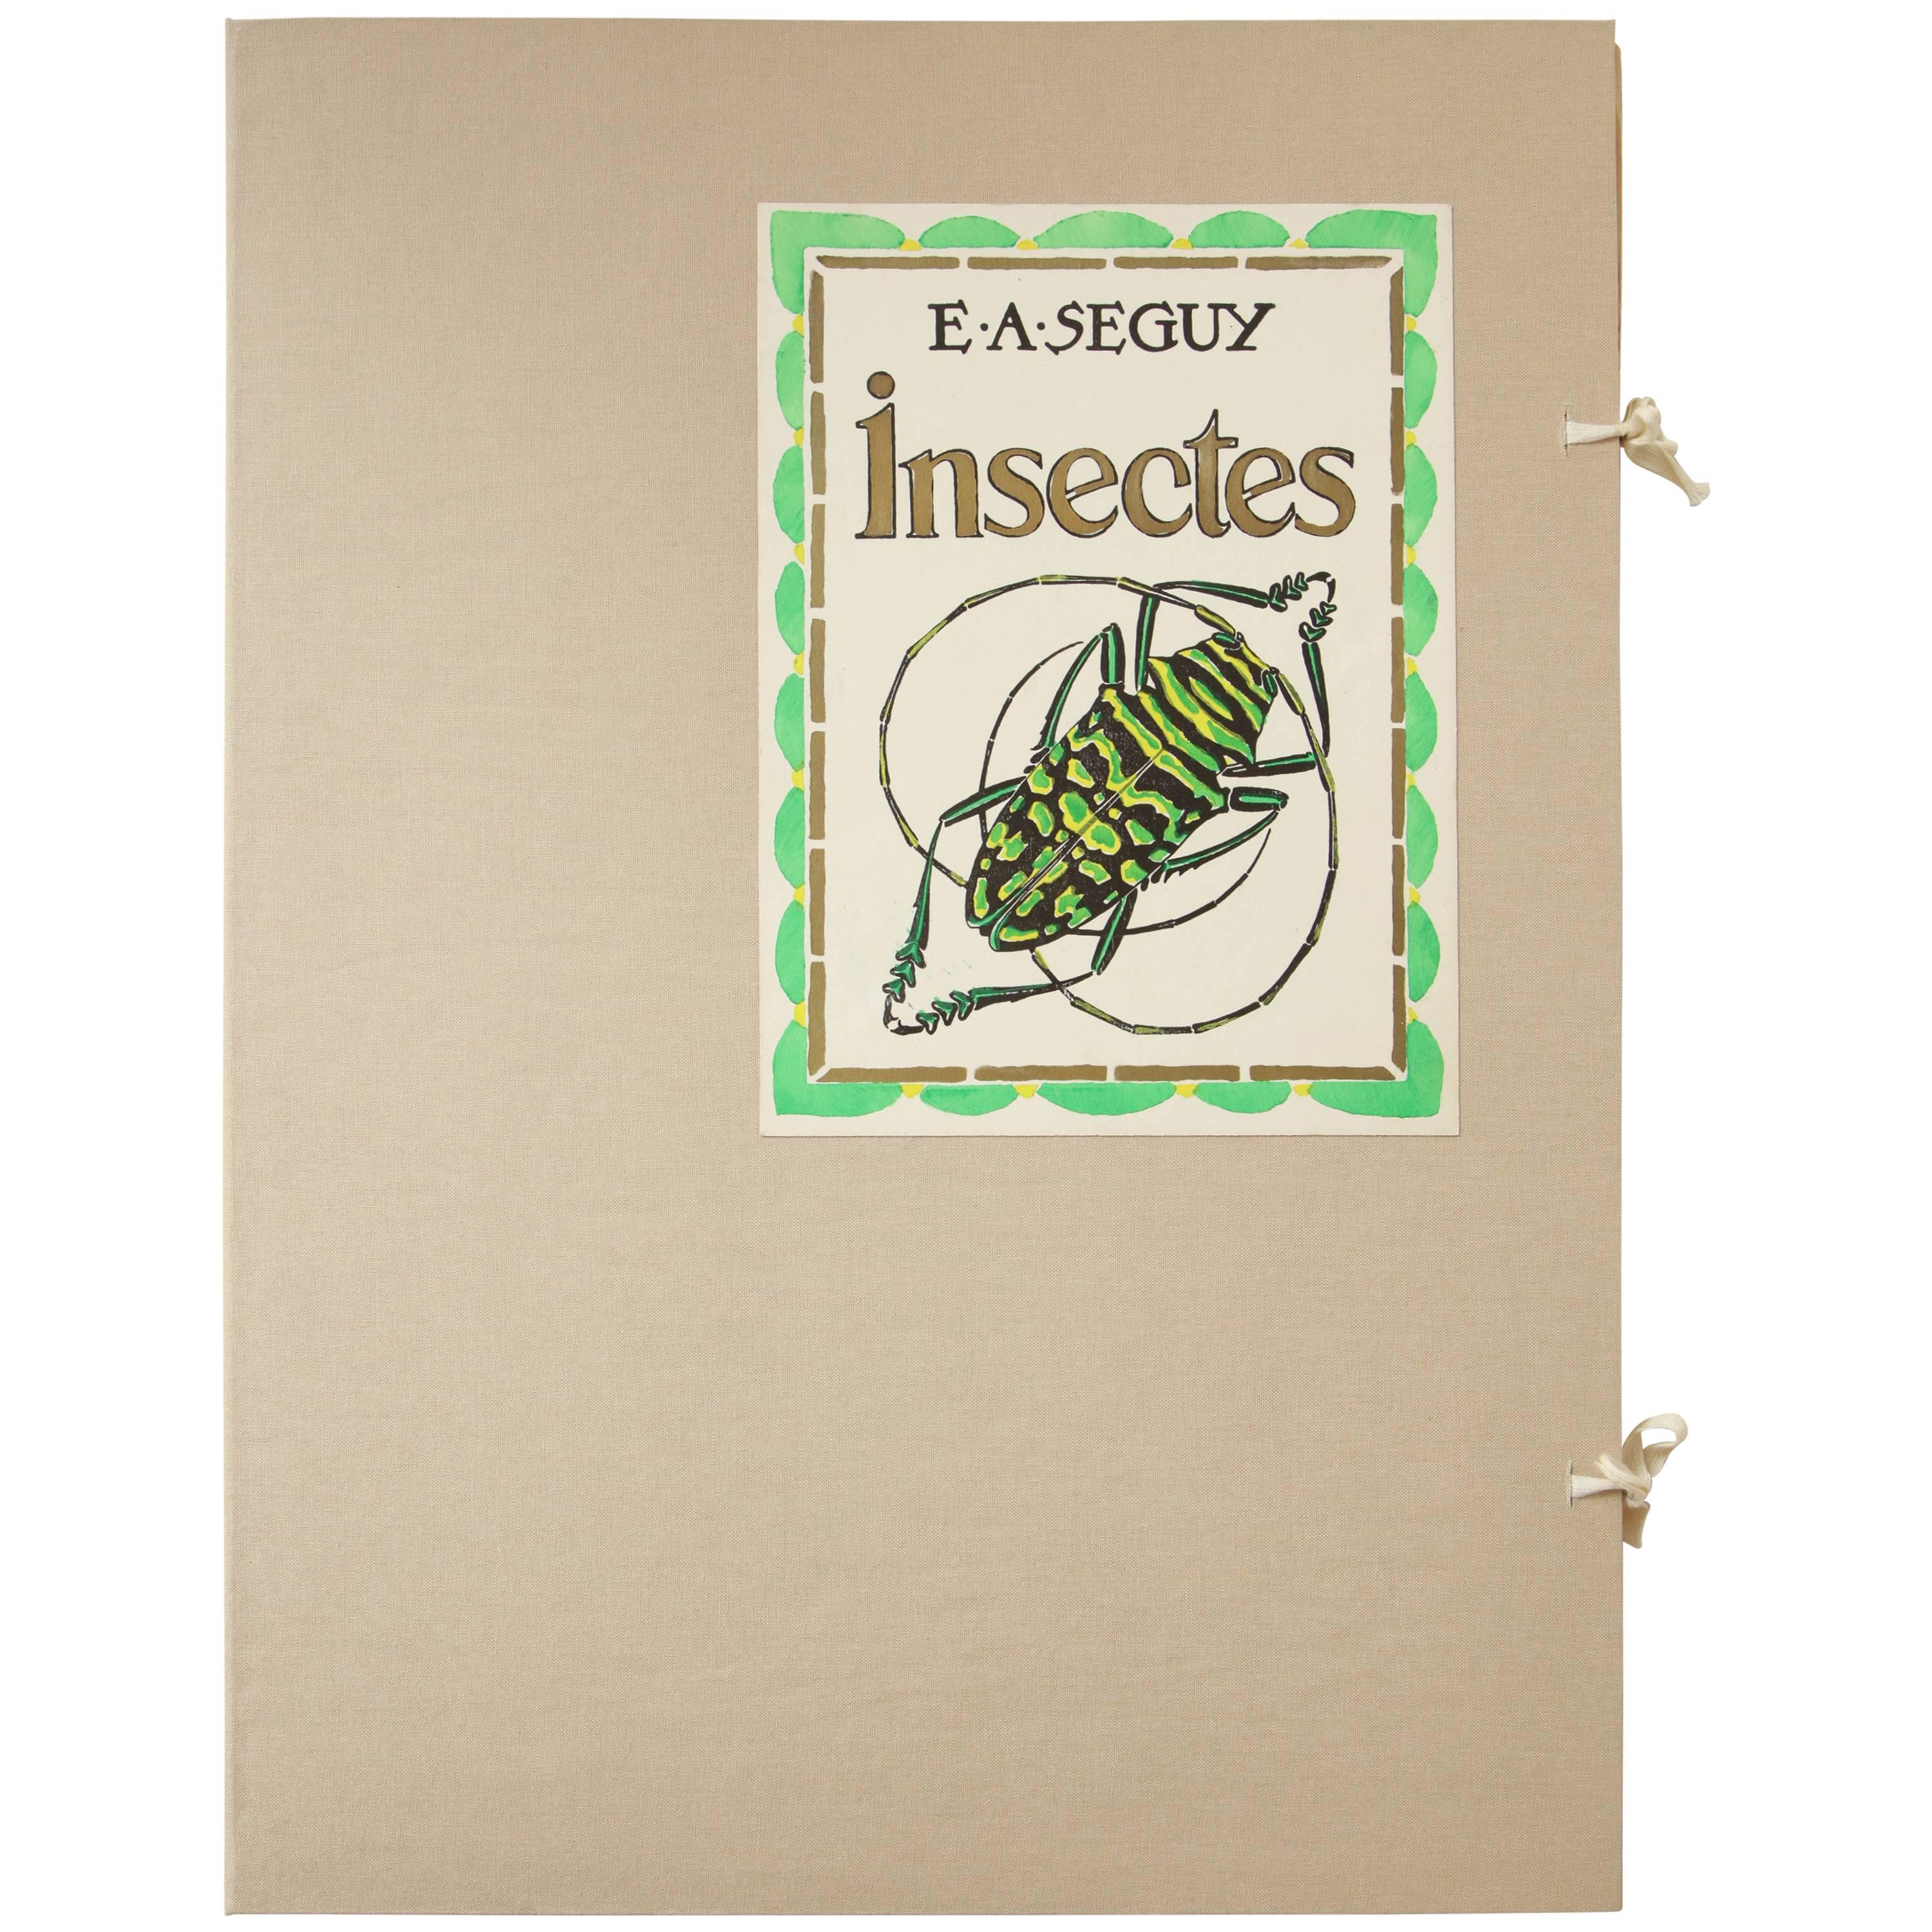 'Insectes' by E.A. Seguy